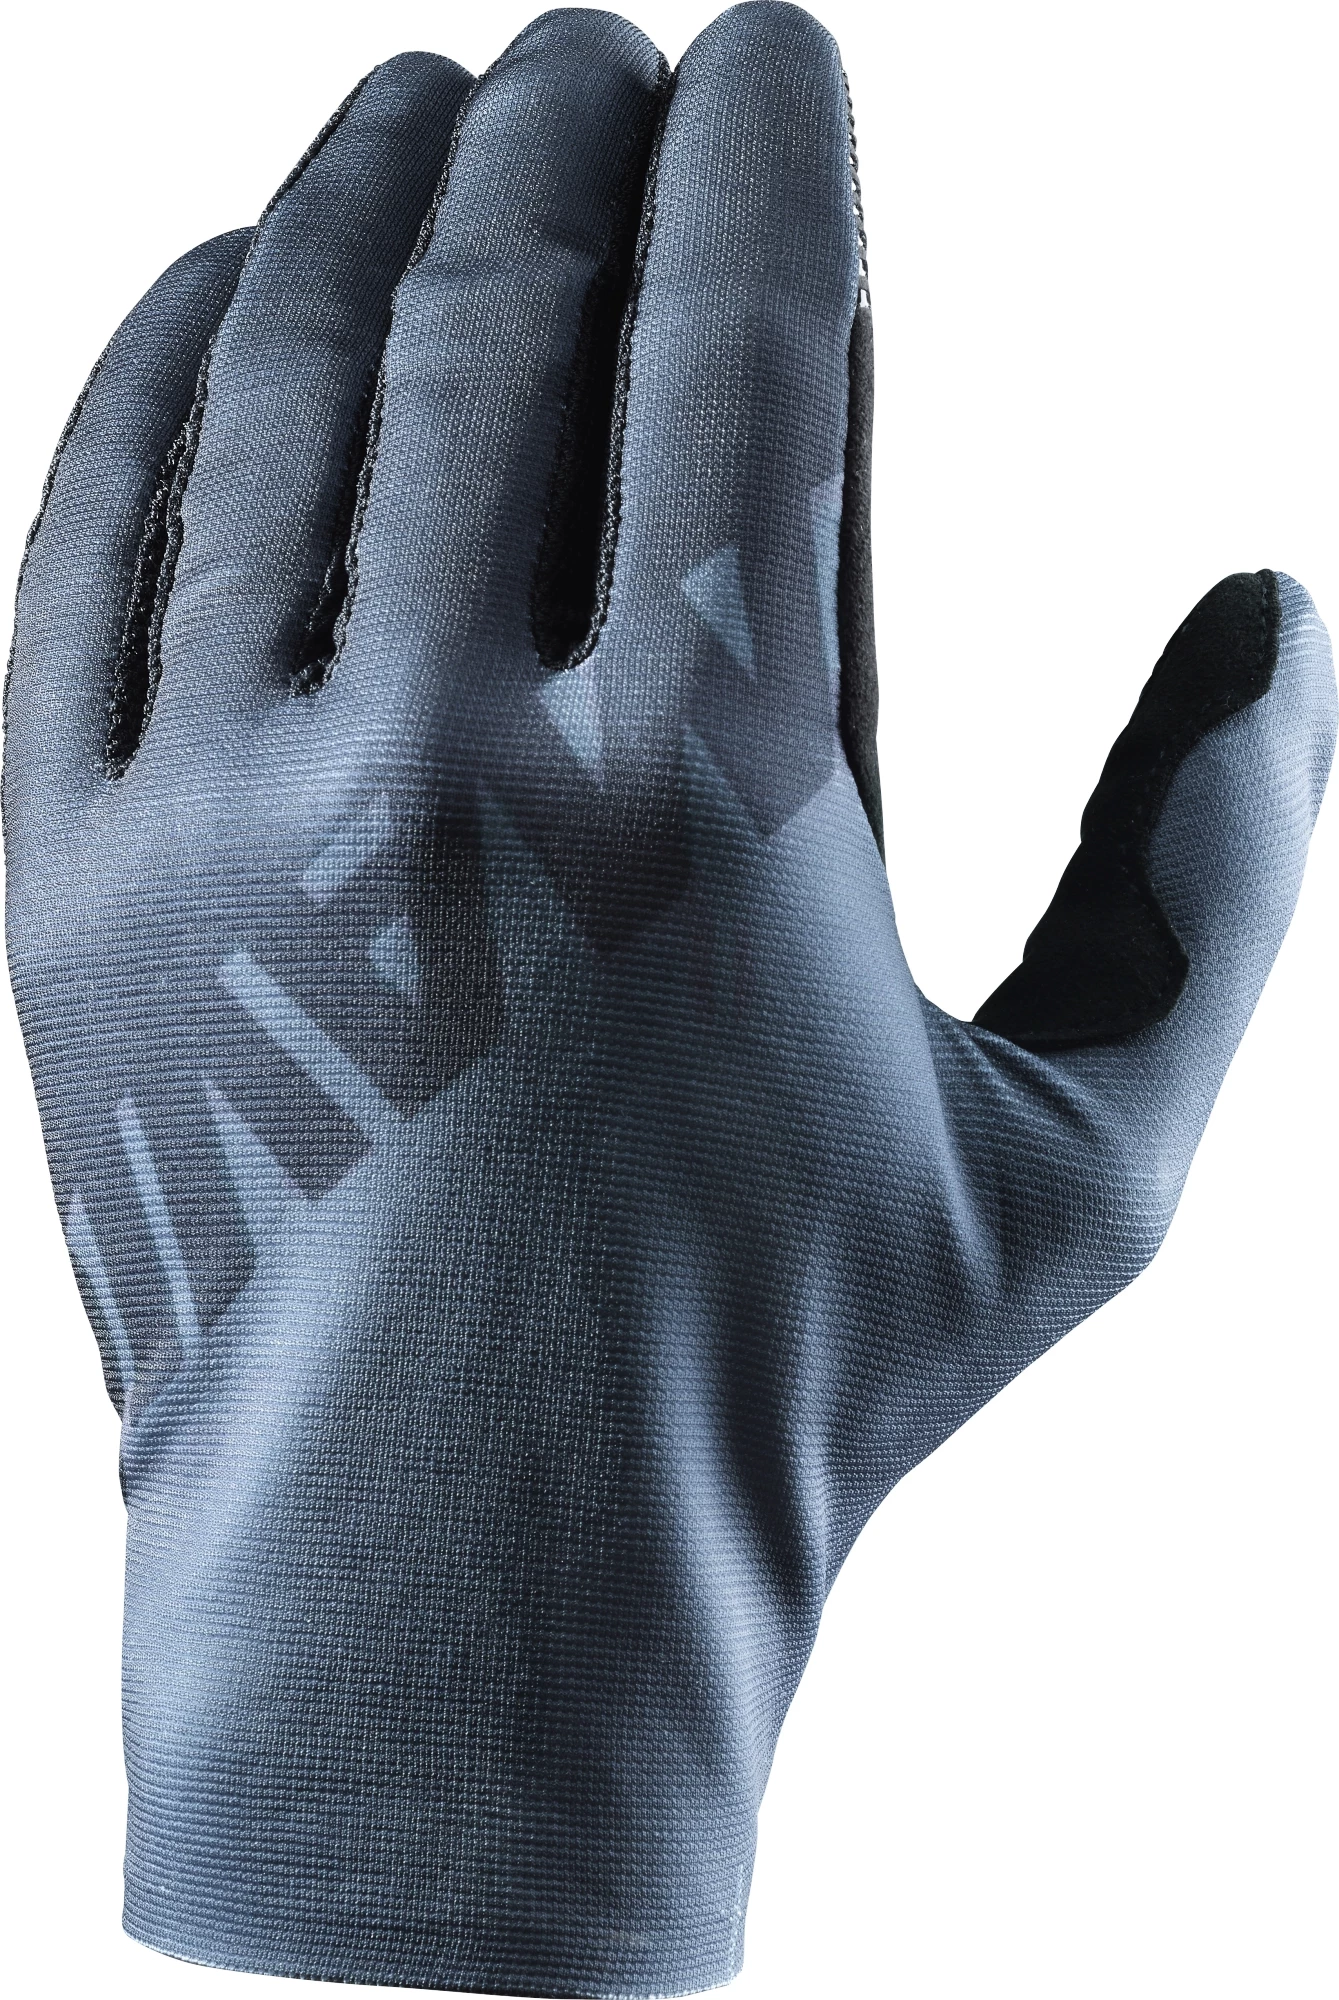 Mavic Deemax Cycling Gloves Black